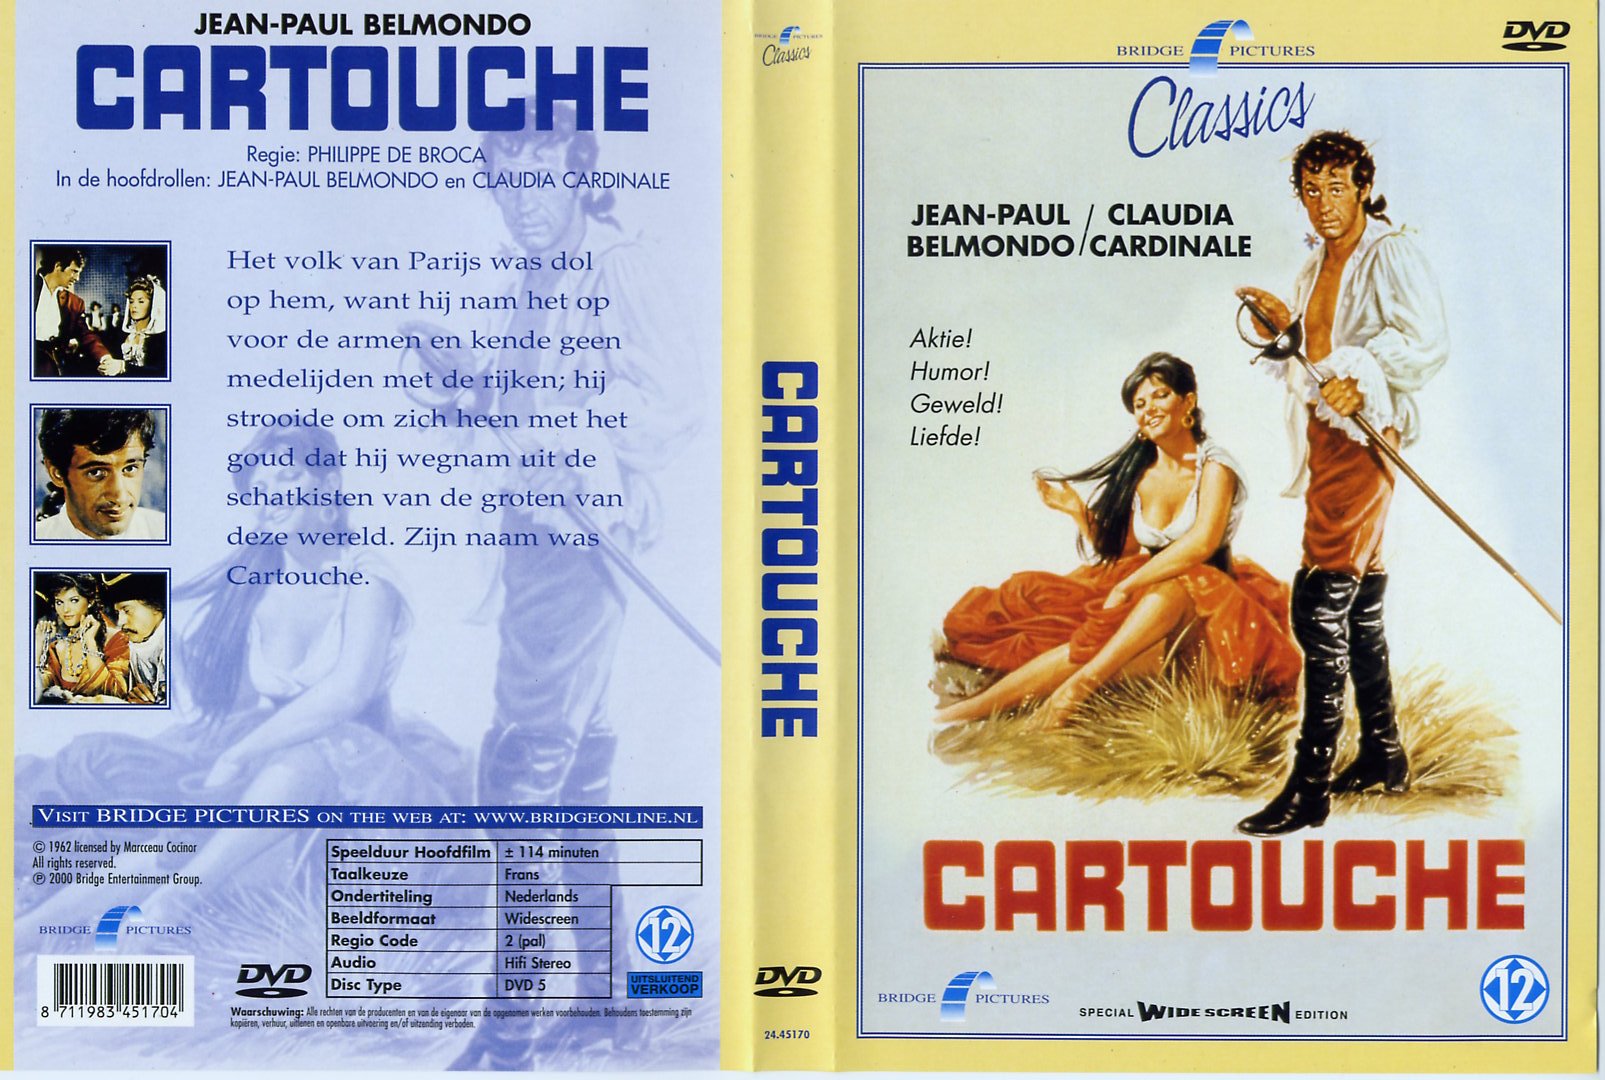 Jaquette DVD Cartouche v3